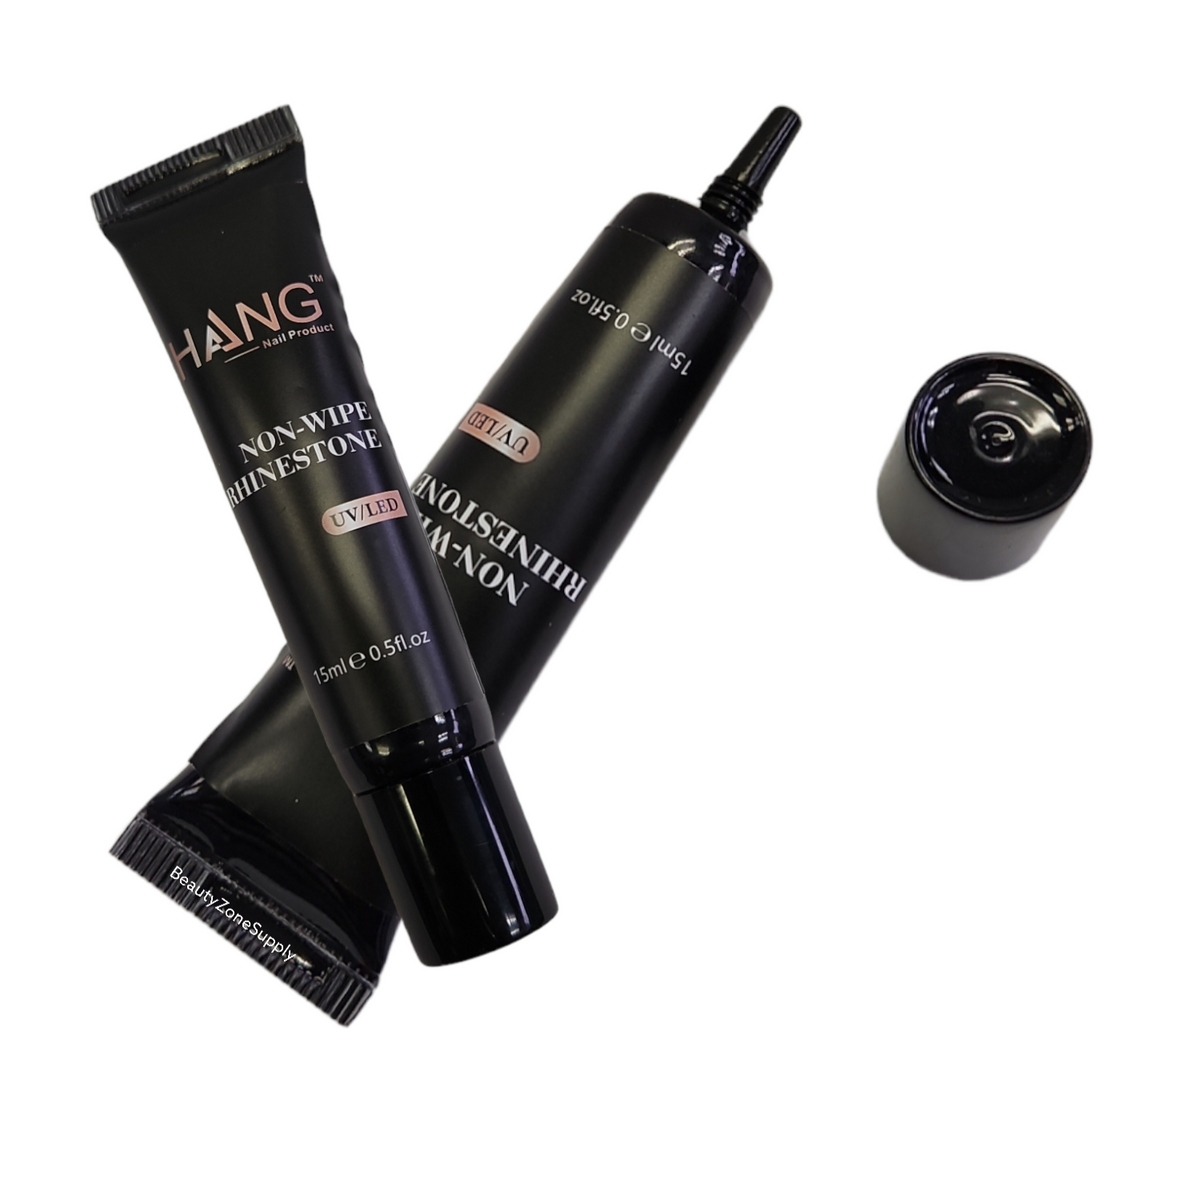 Hang Gel x Rhinestone Glue No- Wipe 15ml /0.5 oz Bottle w/ thin brush –  Beauty Zone Nail Supply